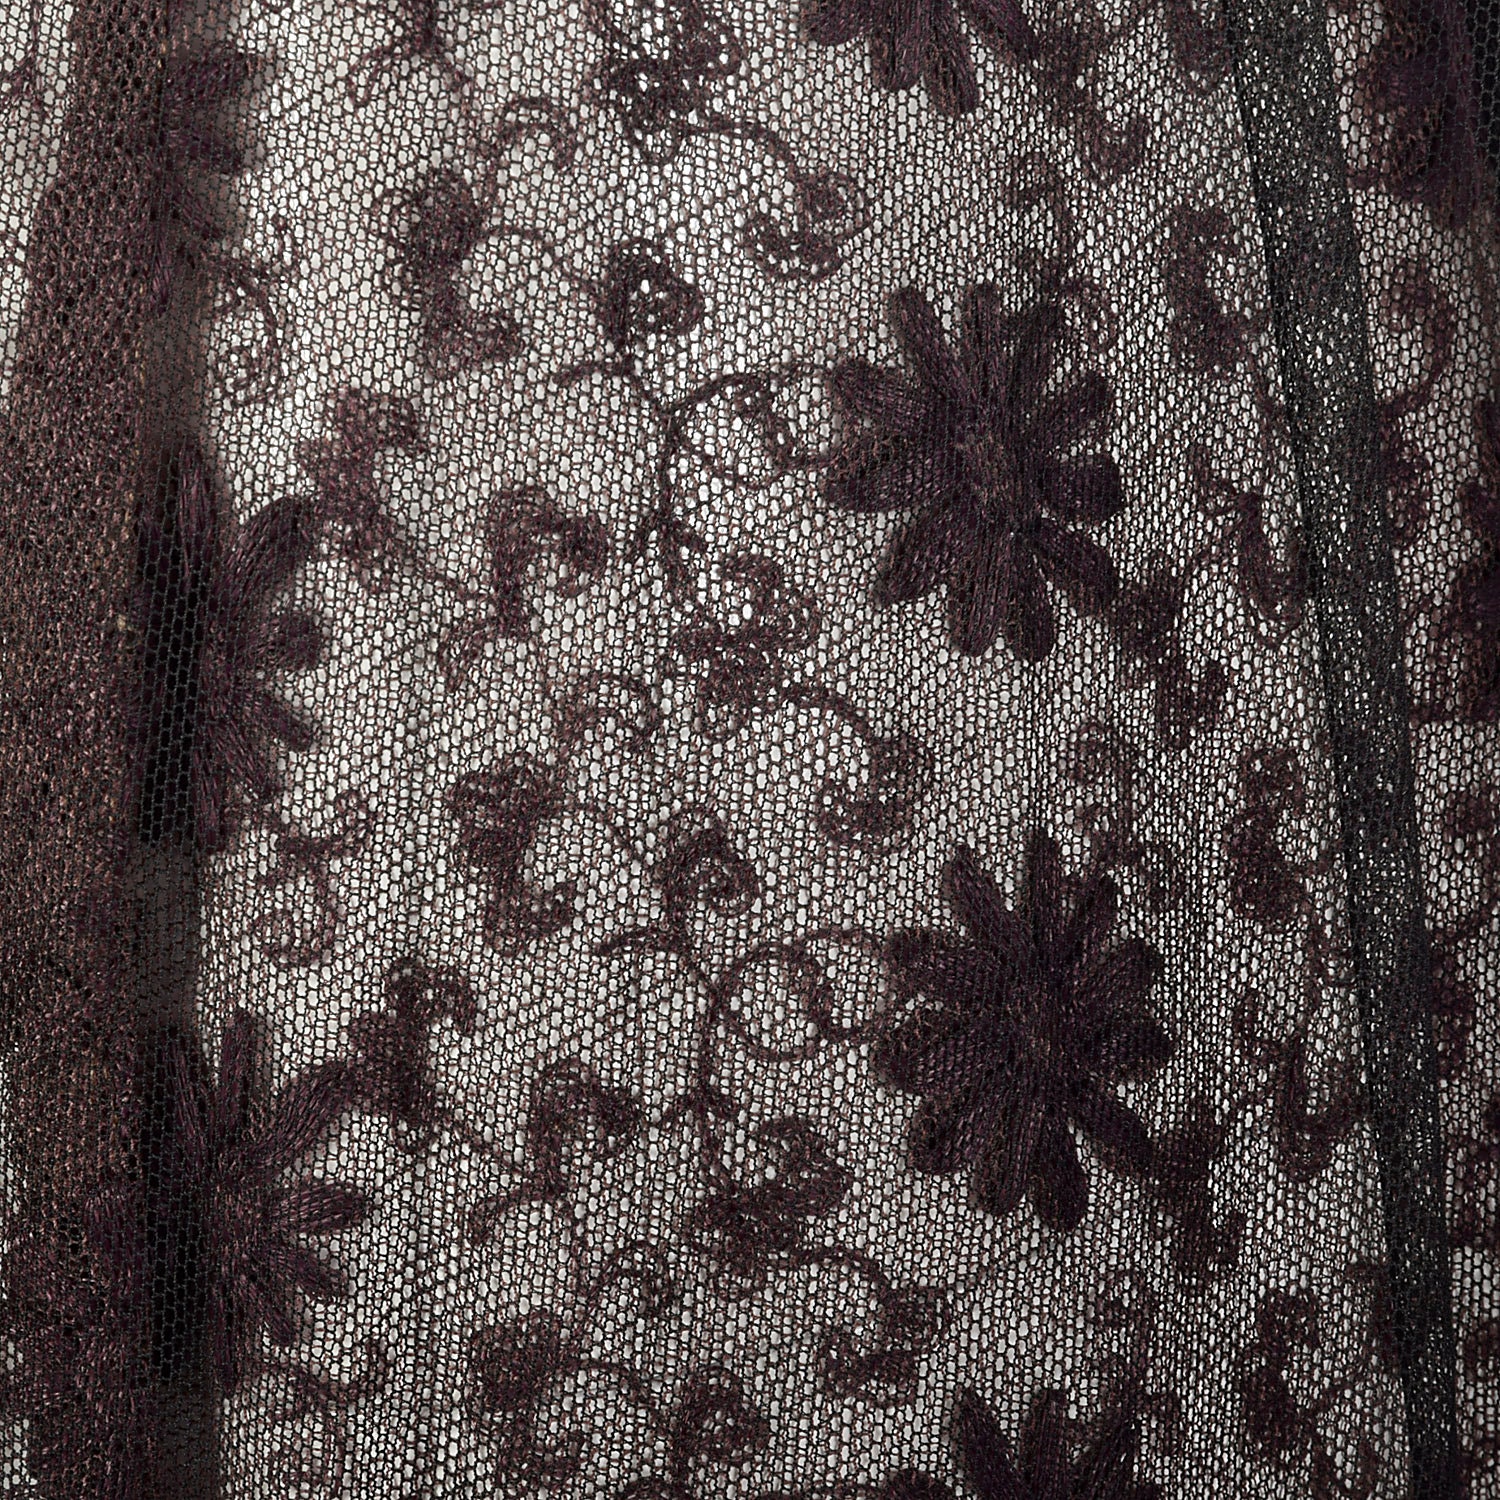 XS 1910s Dress Edwardian Sheer Black Floral Purple Lace Beaded Details ...